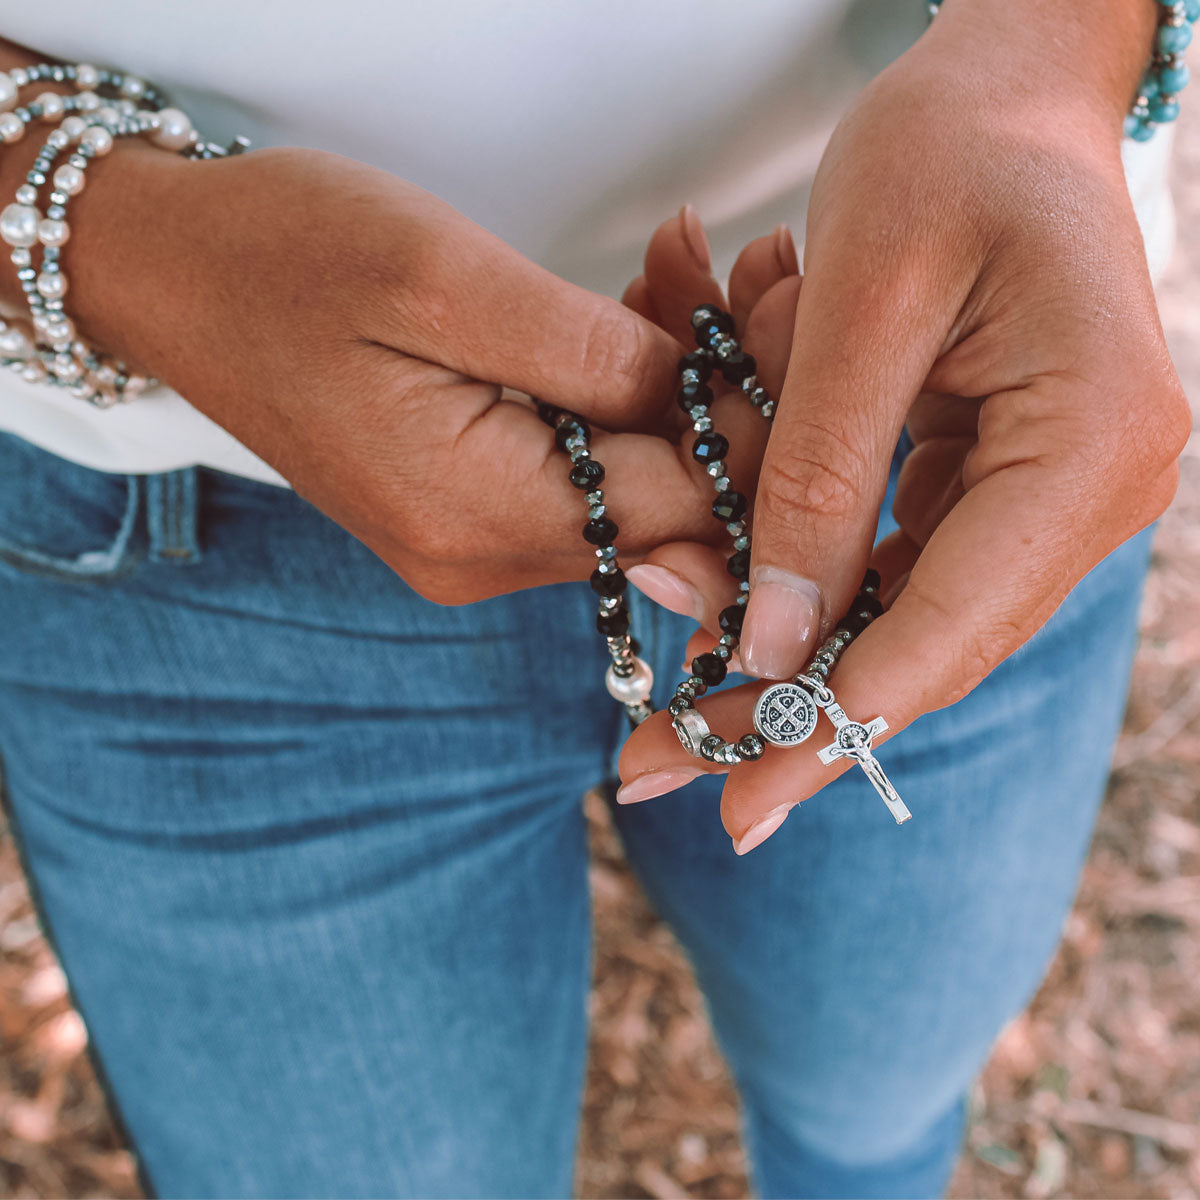 Pearl & Black Crystal Wrap Rosary Bracelet